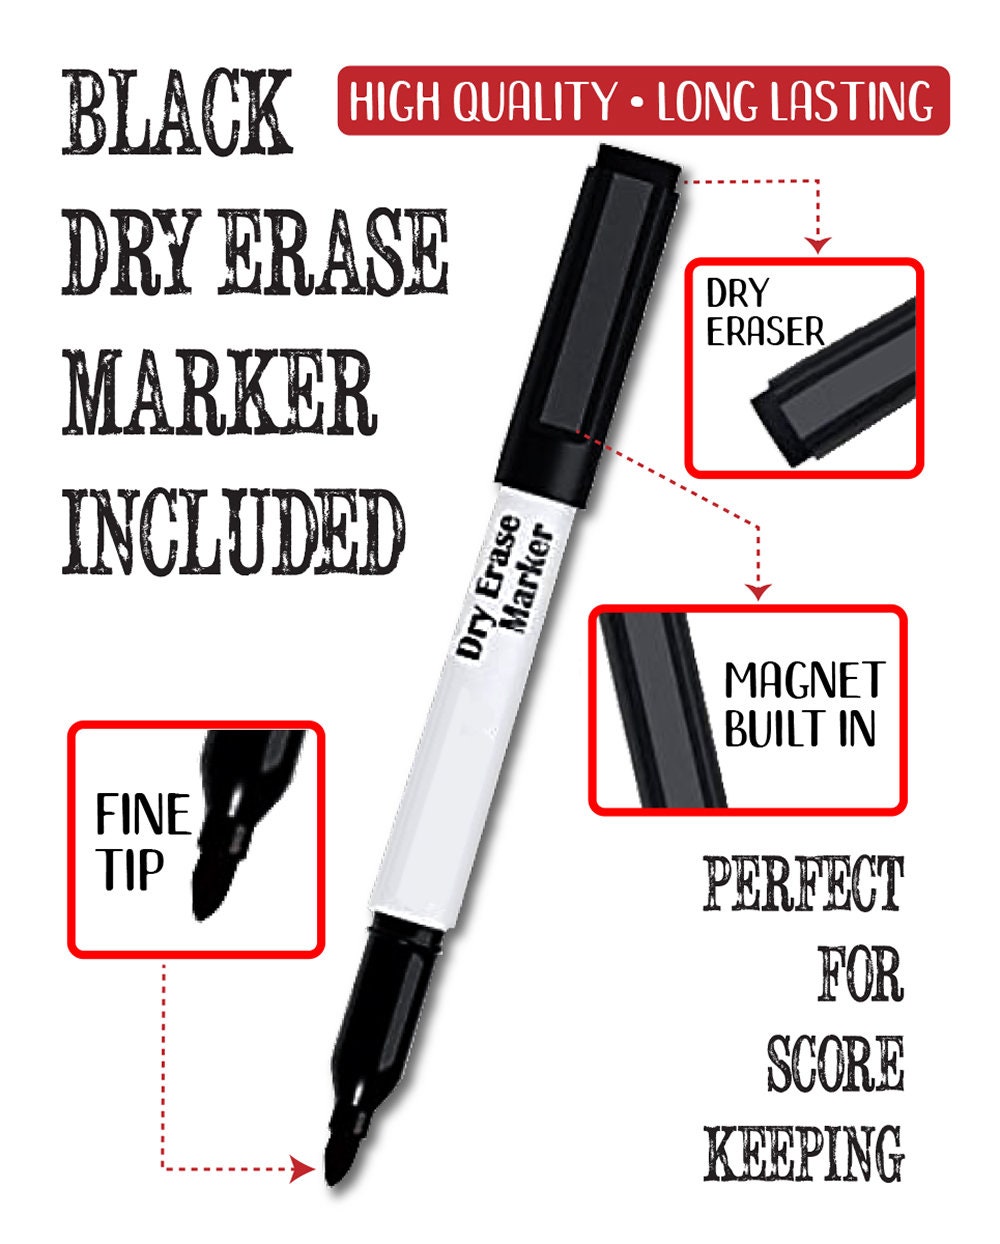 Dart Scoreboard (Grey) Dry Erase for Keeping Score in Games Cricket, 301 or 501- Metal Sign Metal Sign Lone Star Art 